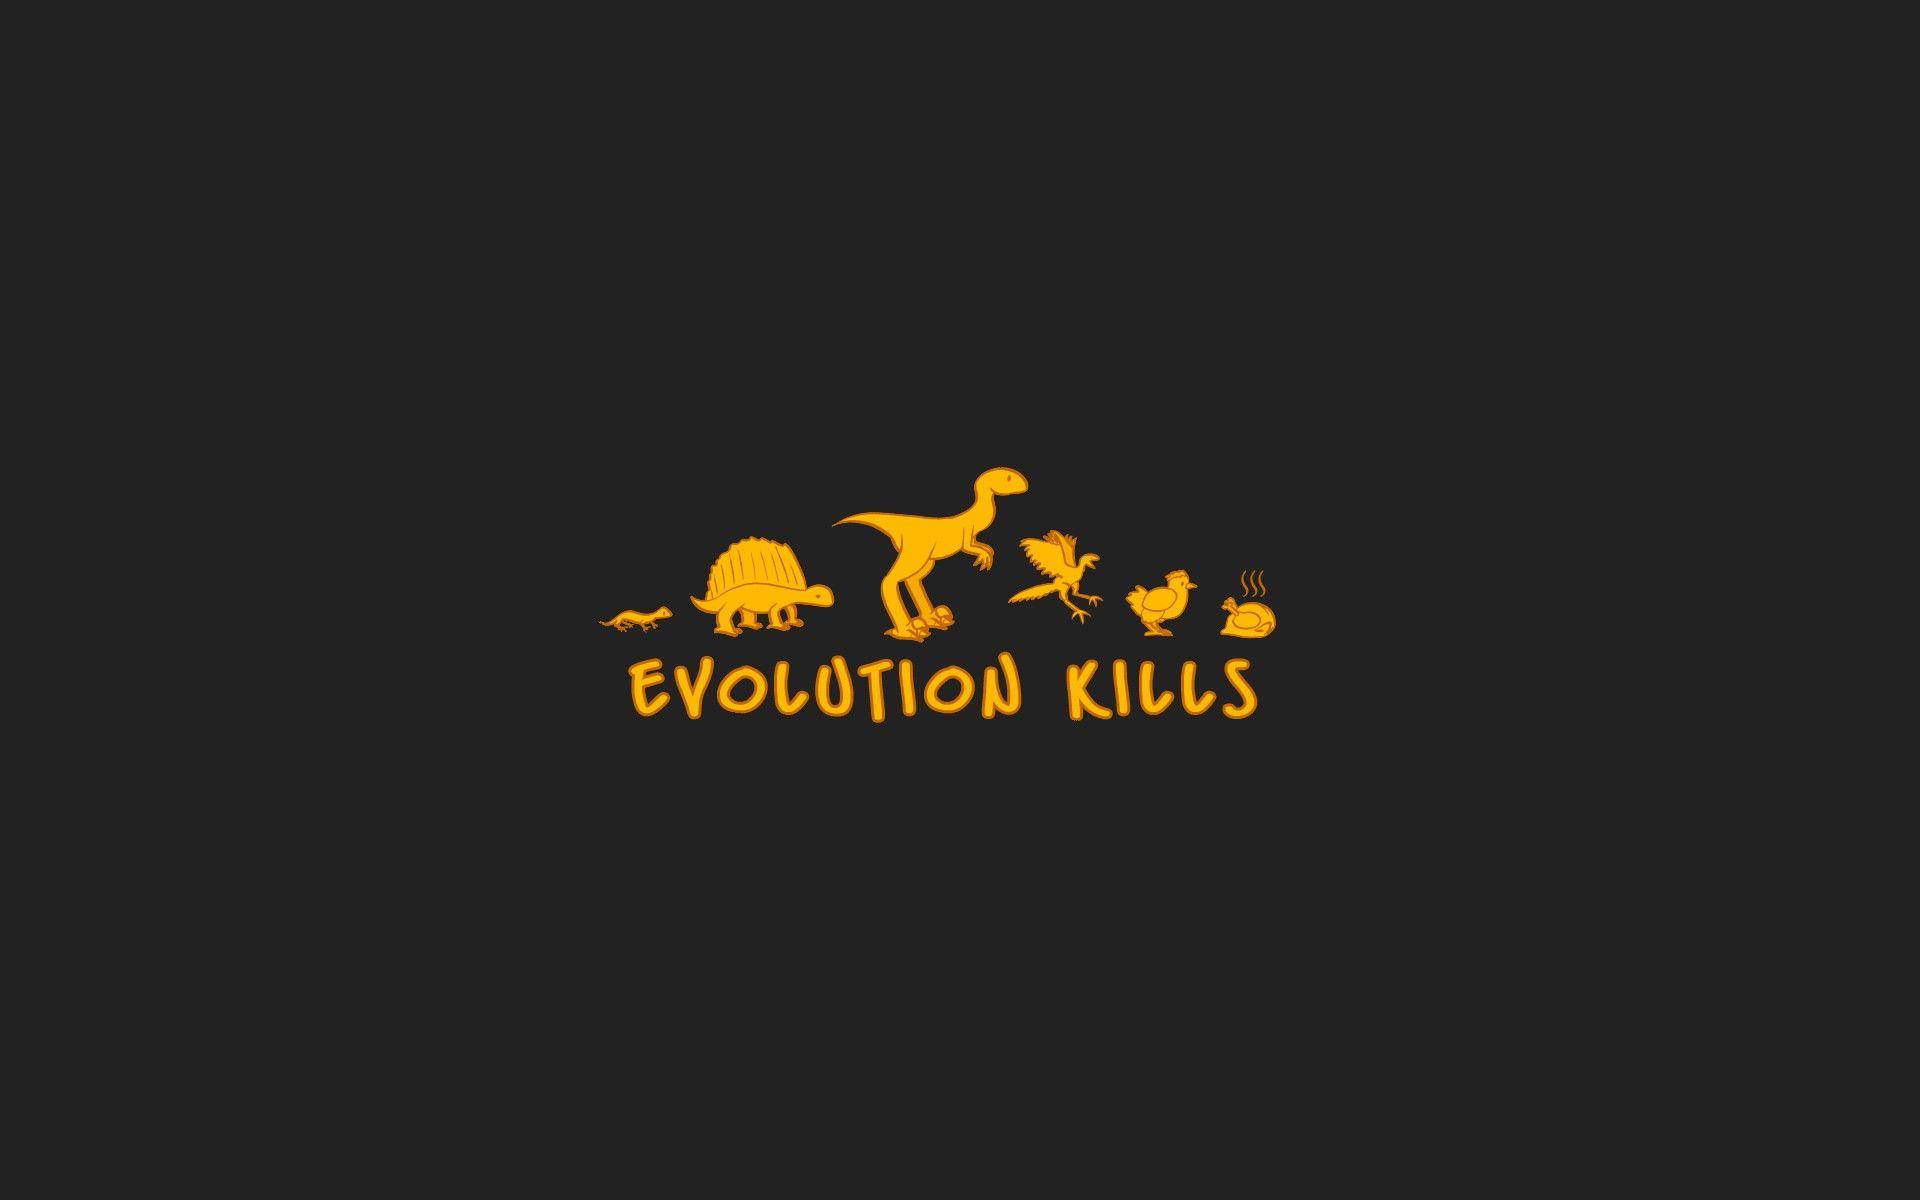 Evolution Kills, HD Inspiration, 4k Wallpaper, Image, Background